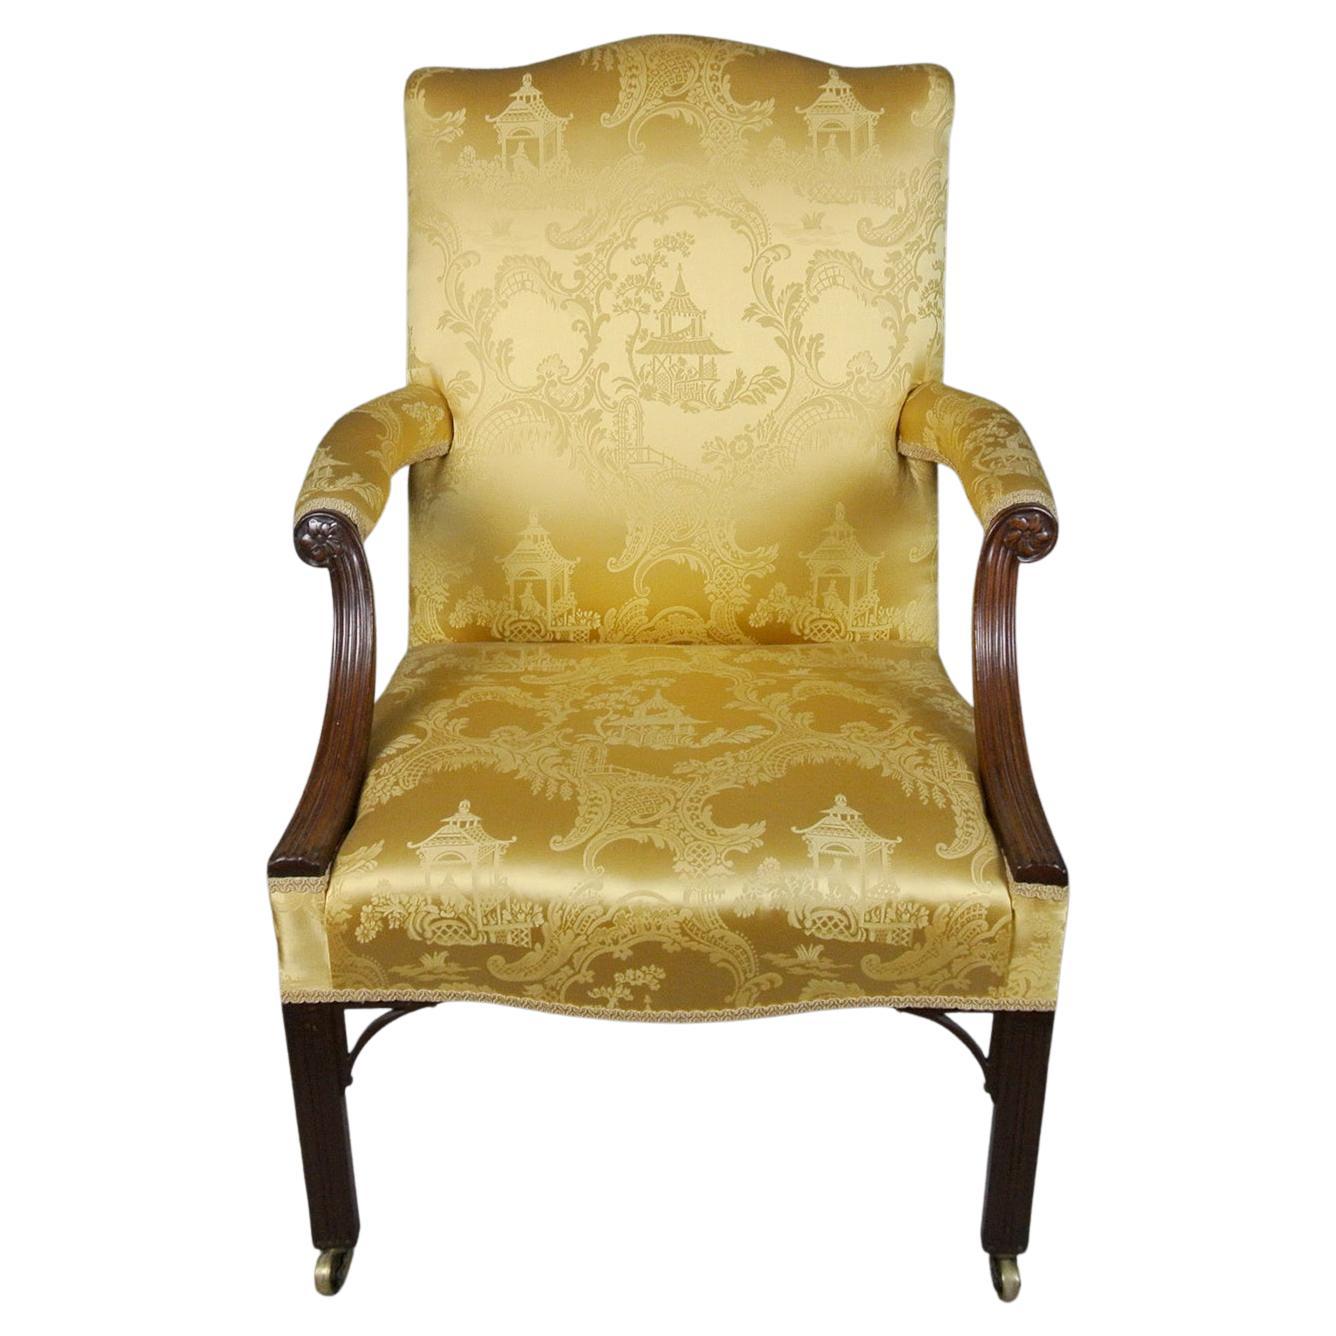 Exemplary George II Mahogany Gainsborough Chair c.1750 For Sale